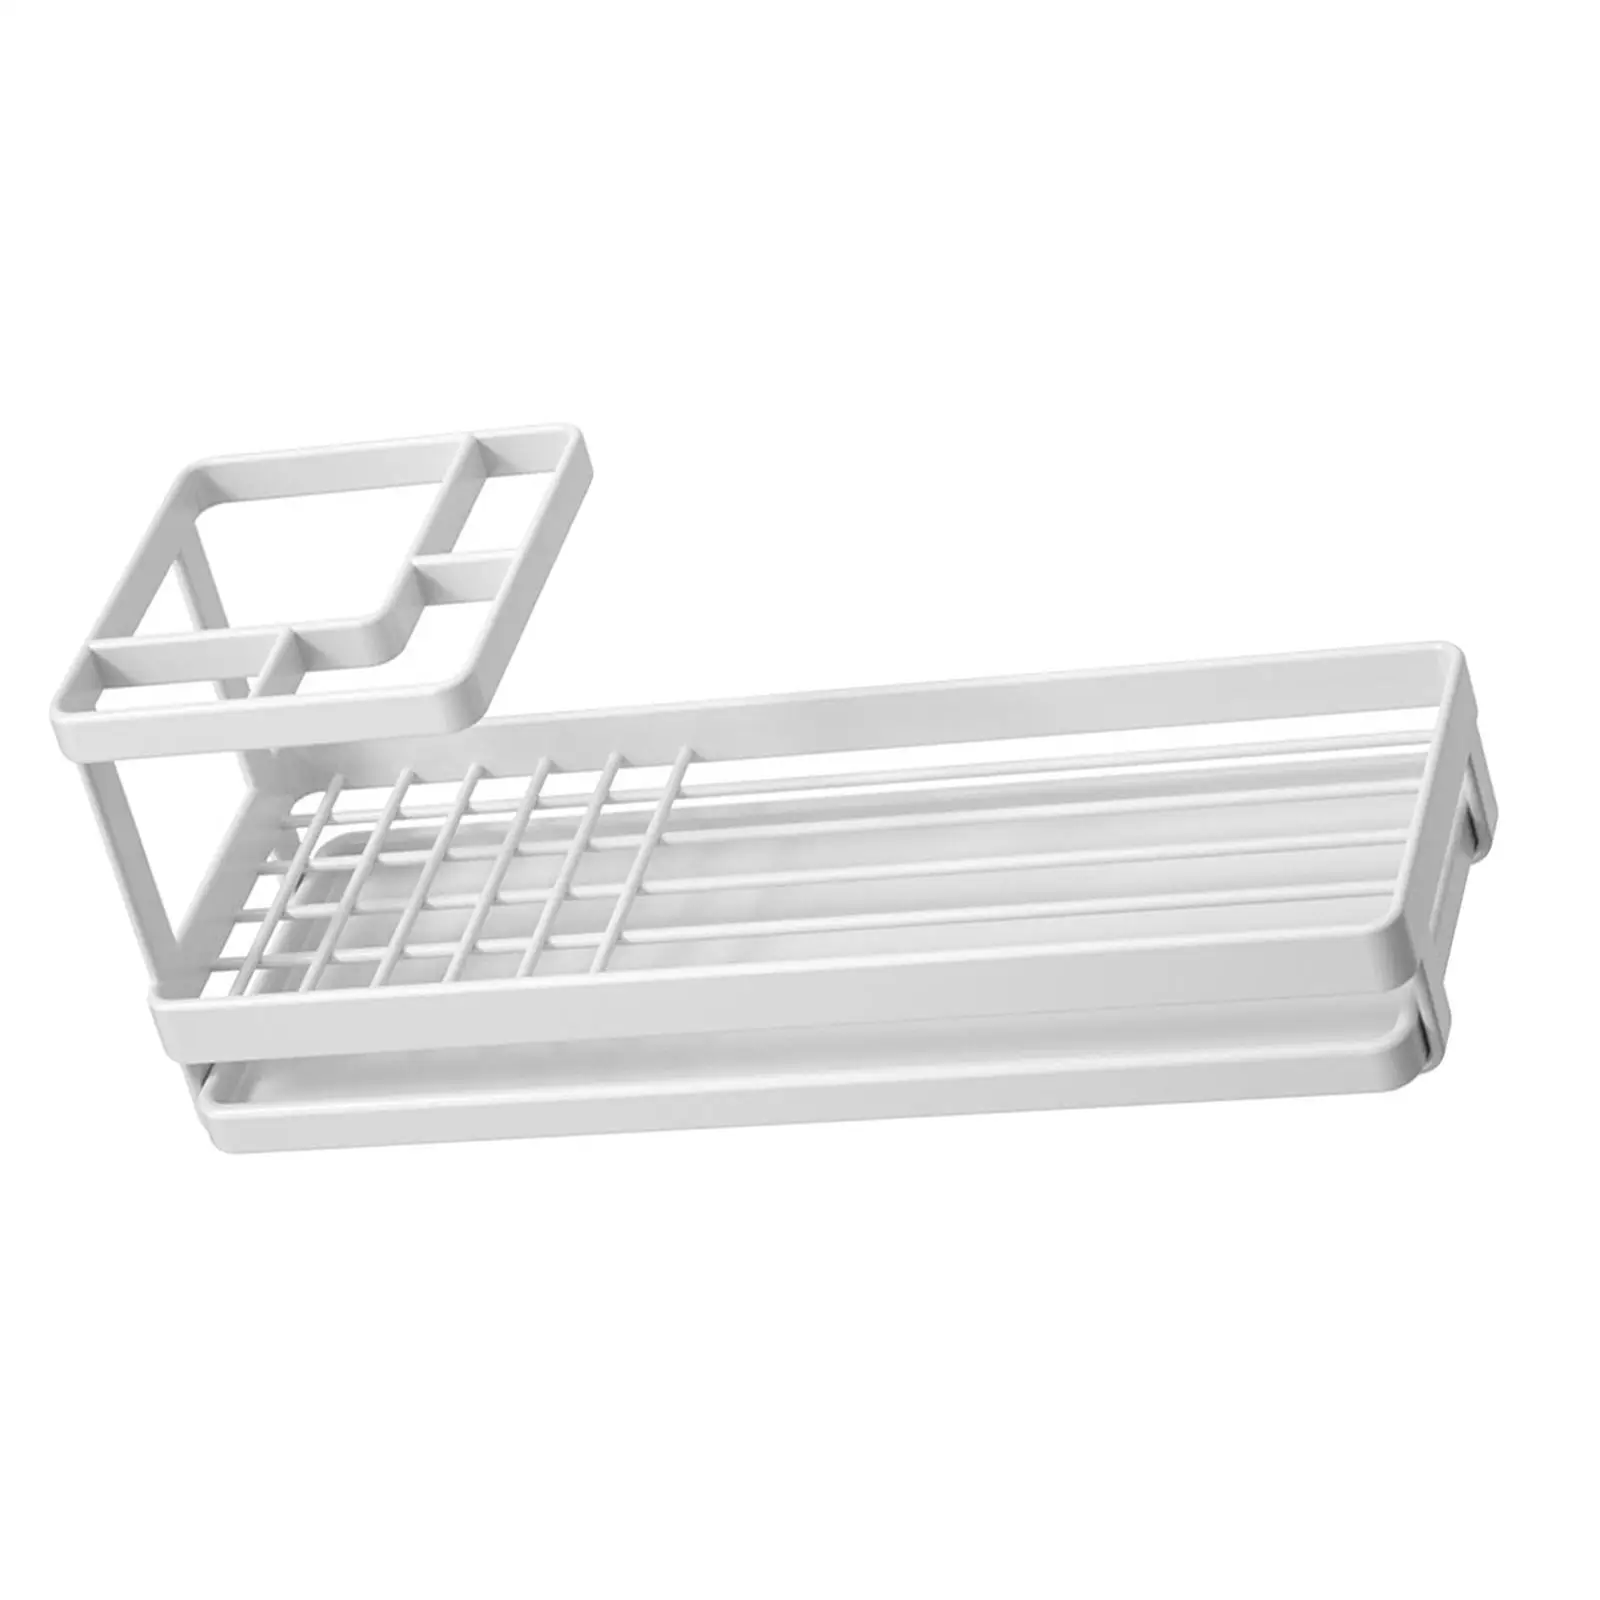 Toothbrush Holder Bathroom Tray Caddy Multifunctional for Desktop Household